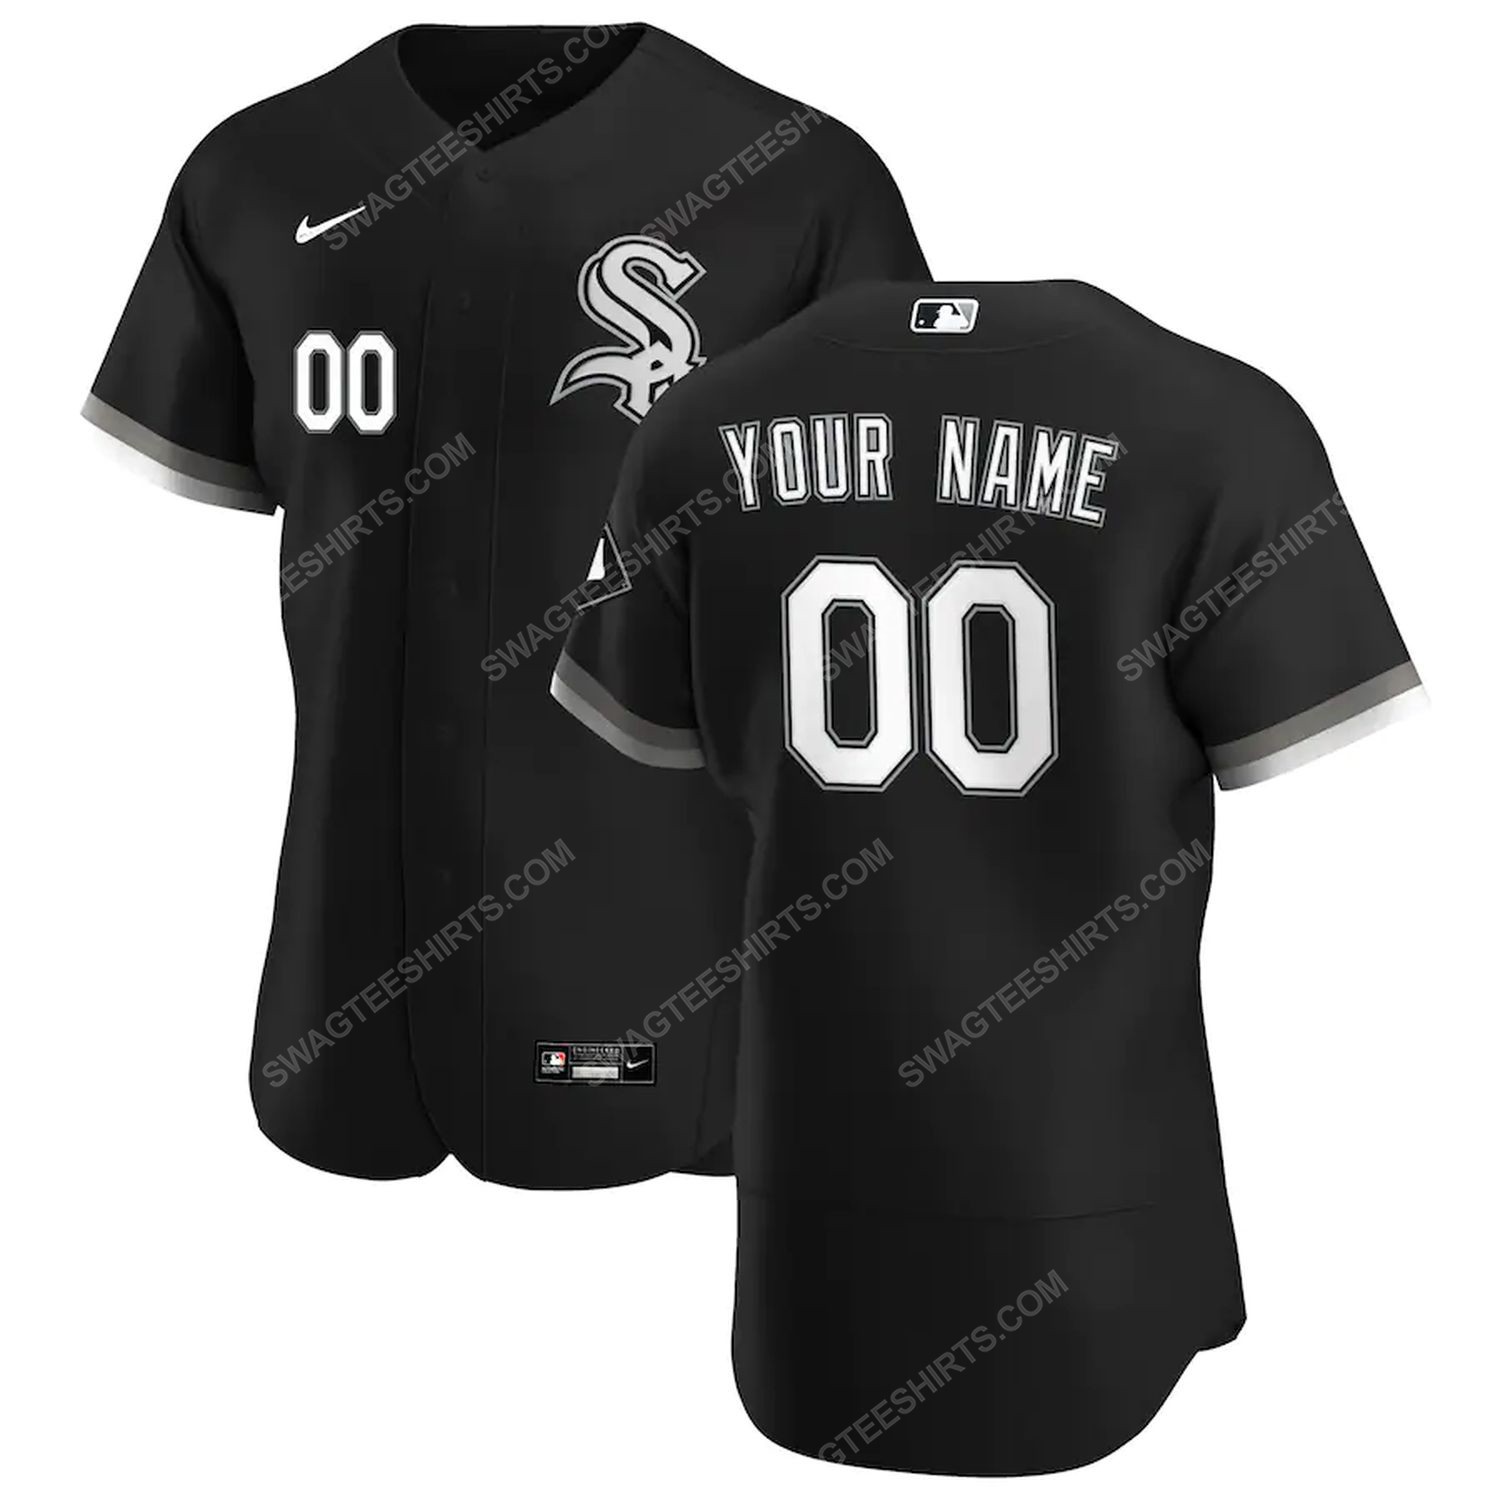 Personalized mlb chicago white sox team baseball jersey - black